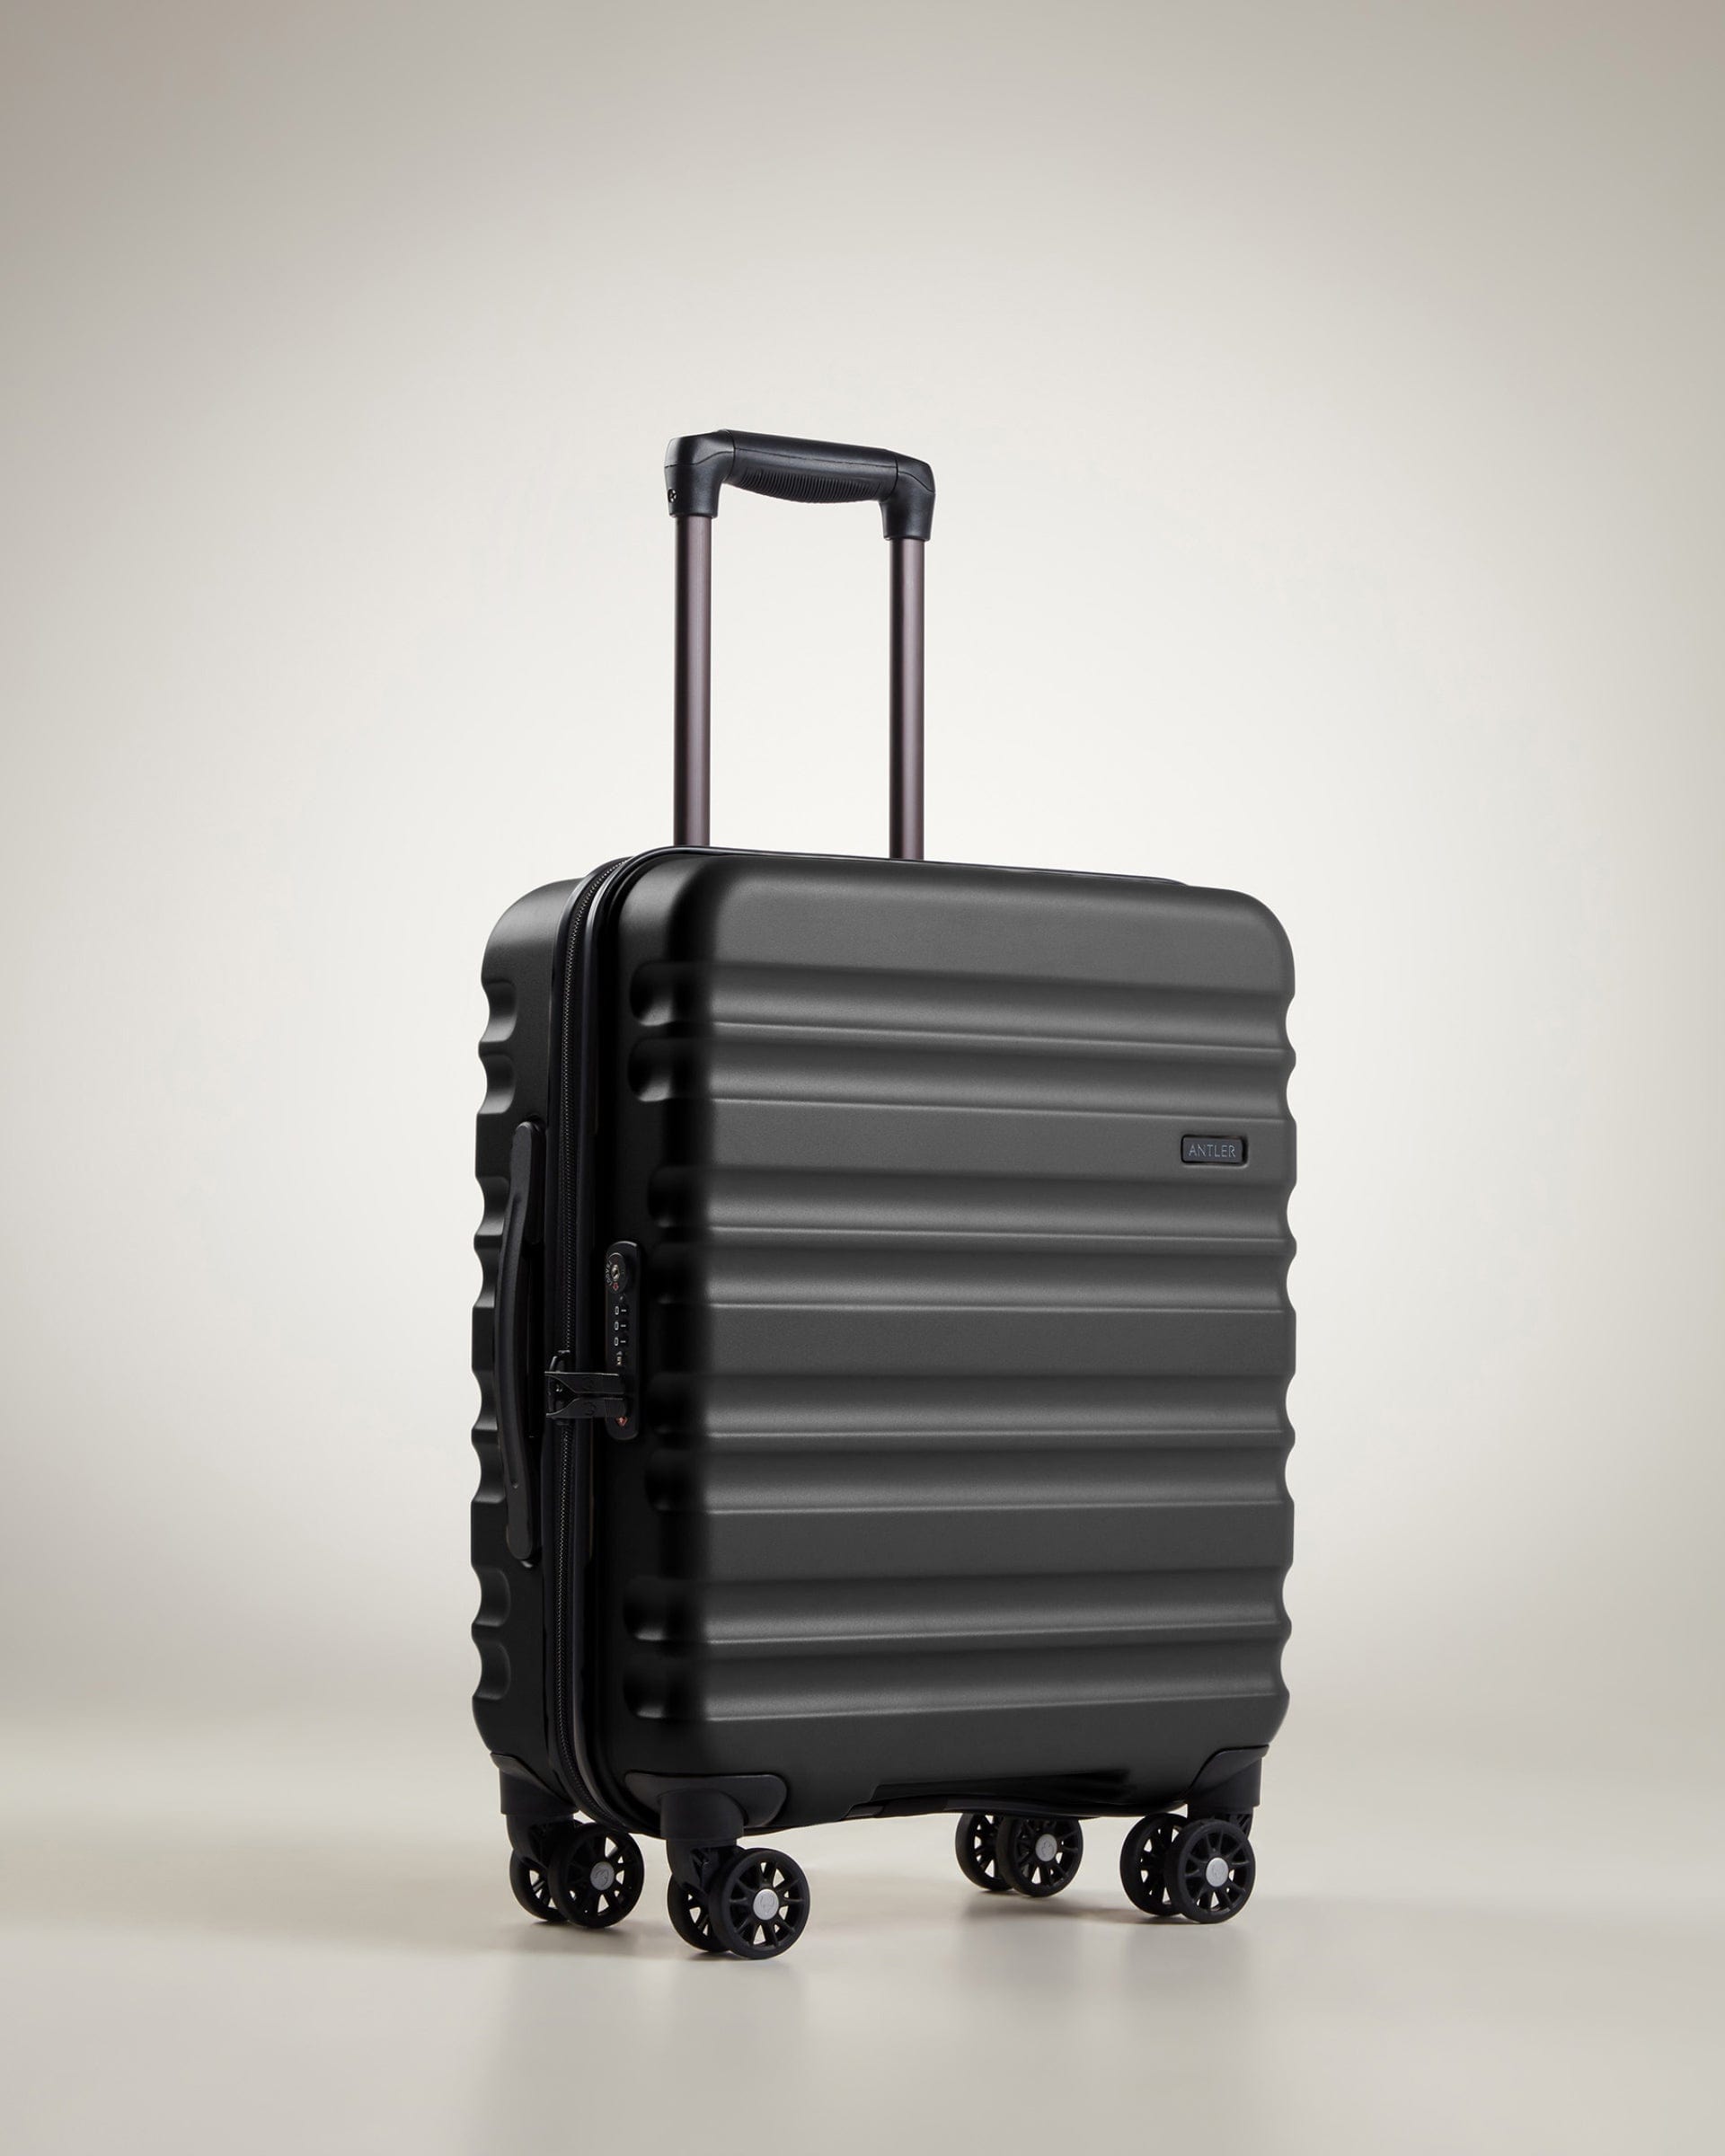 View Antler Clifton Cabin Suitcase In Black Size 55cm x 40cm x 20cm information